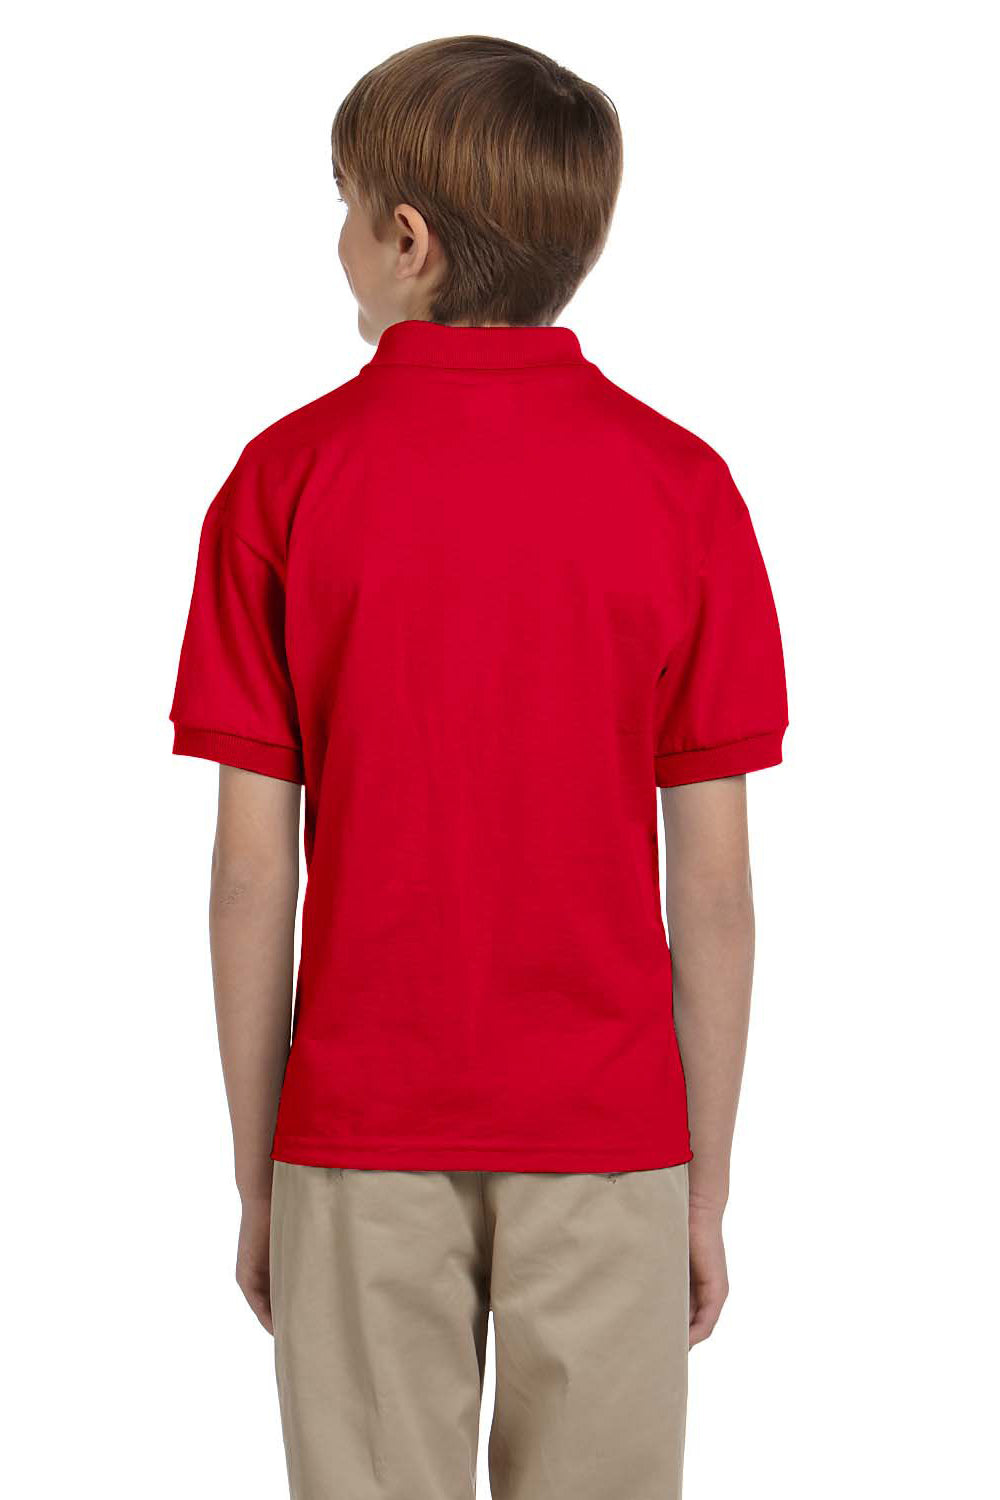 Gildan G880B Youth DryBlend Moisture Wicking Short Sleeve Polo Shirt Red Back